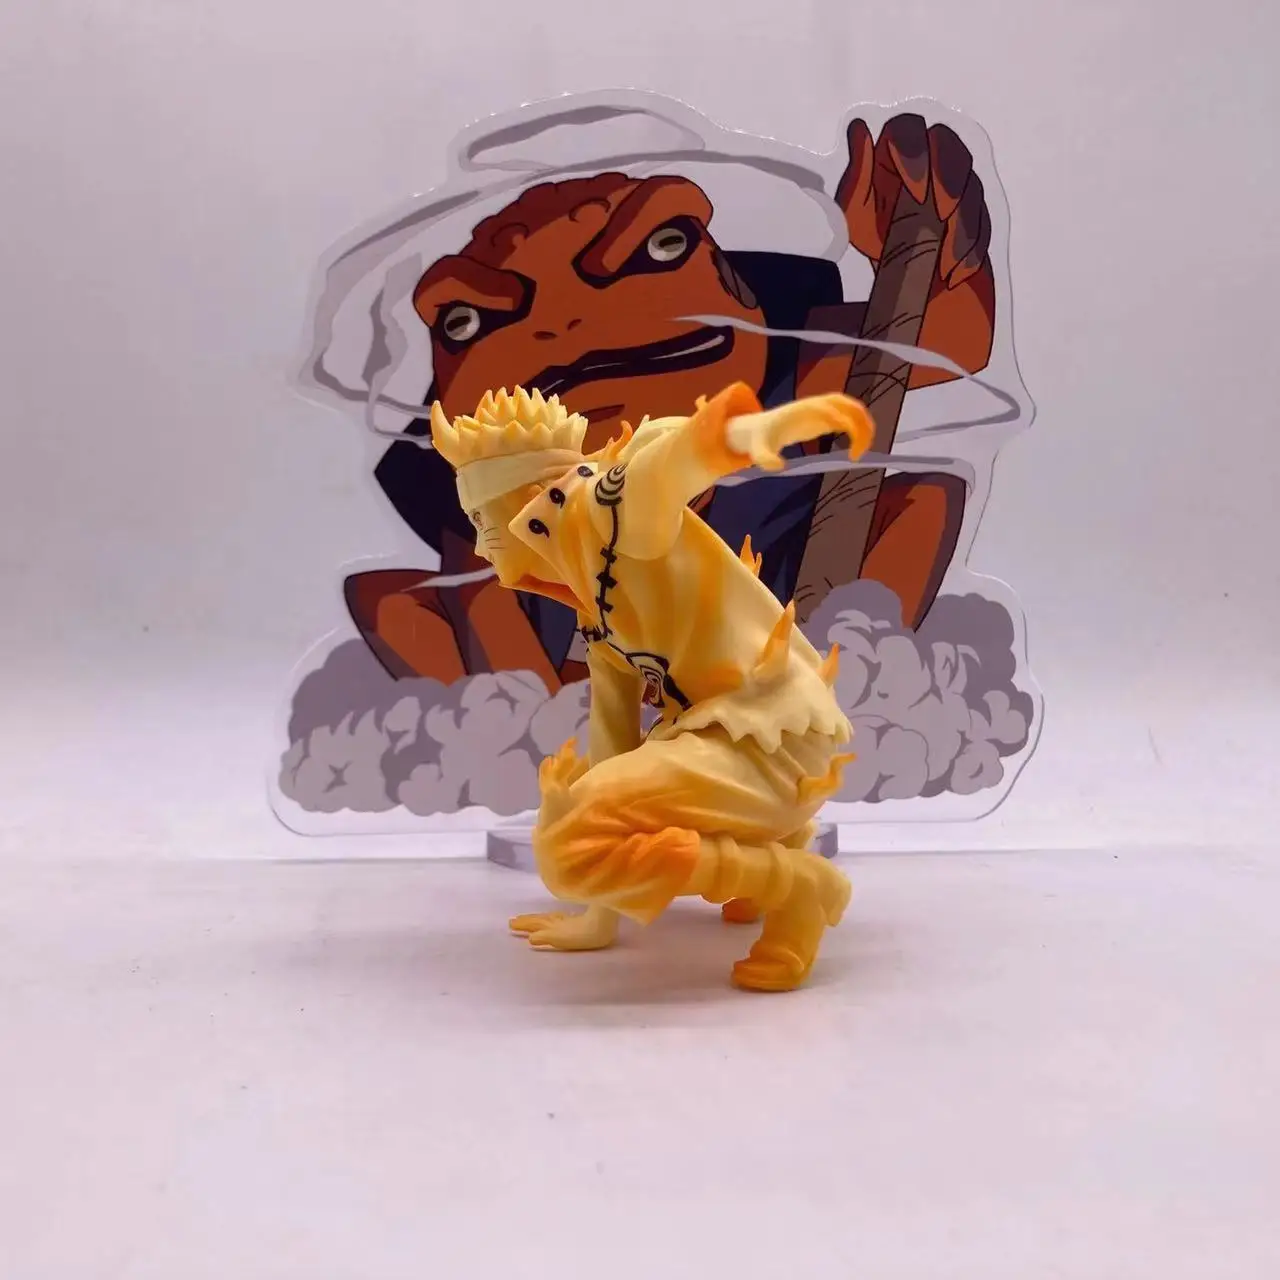 Panel Asli Tontonan Naruto Action Figure Model Mainan Anime Figuralscar Konsol Tengah Ornamen Mainan Stand Kartu Kodok - 3